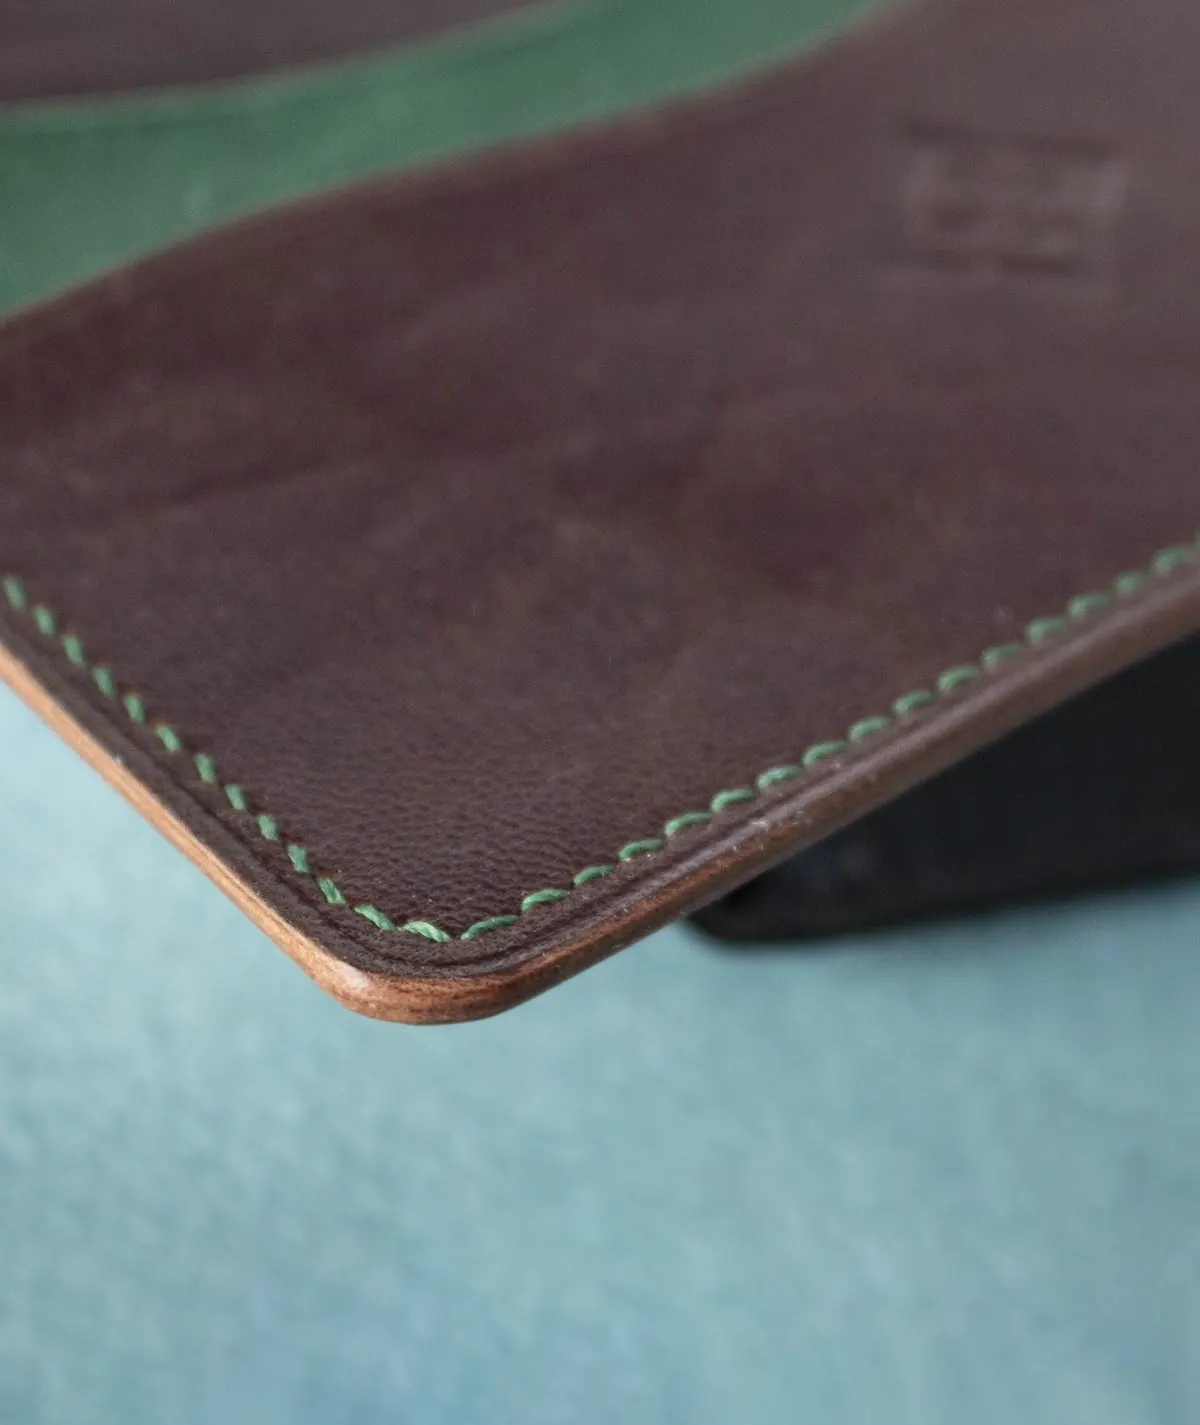 possala designs edge detail on handmade wallet